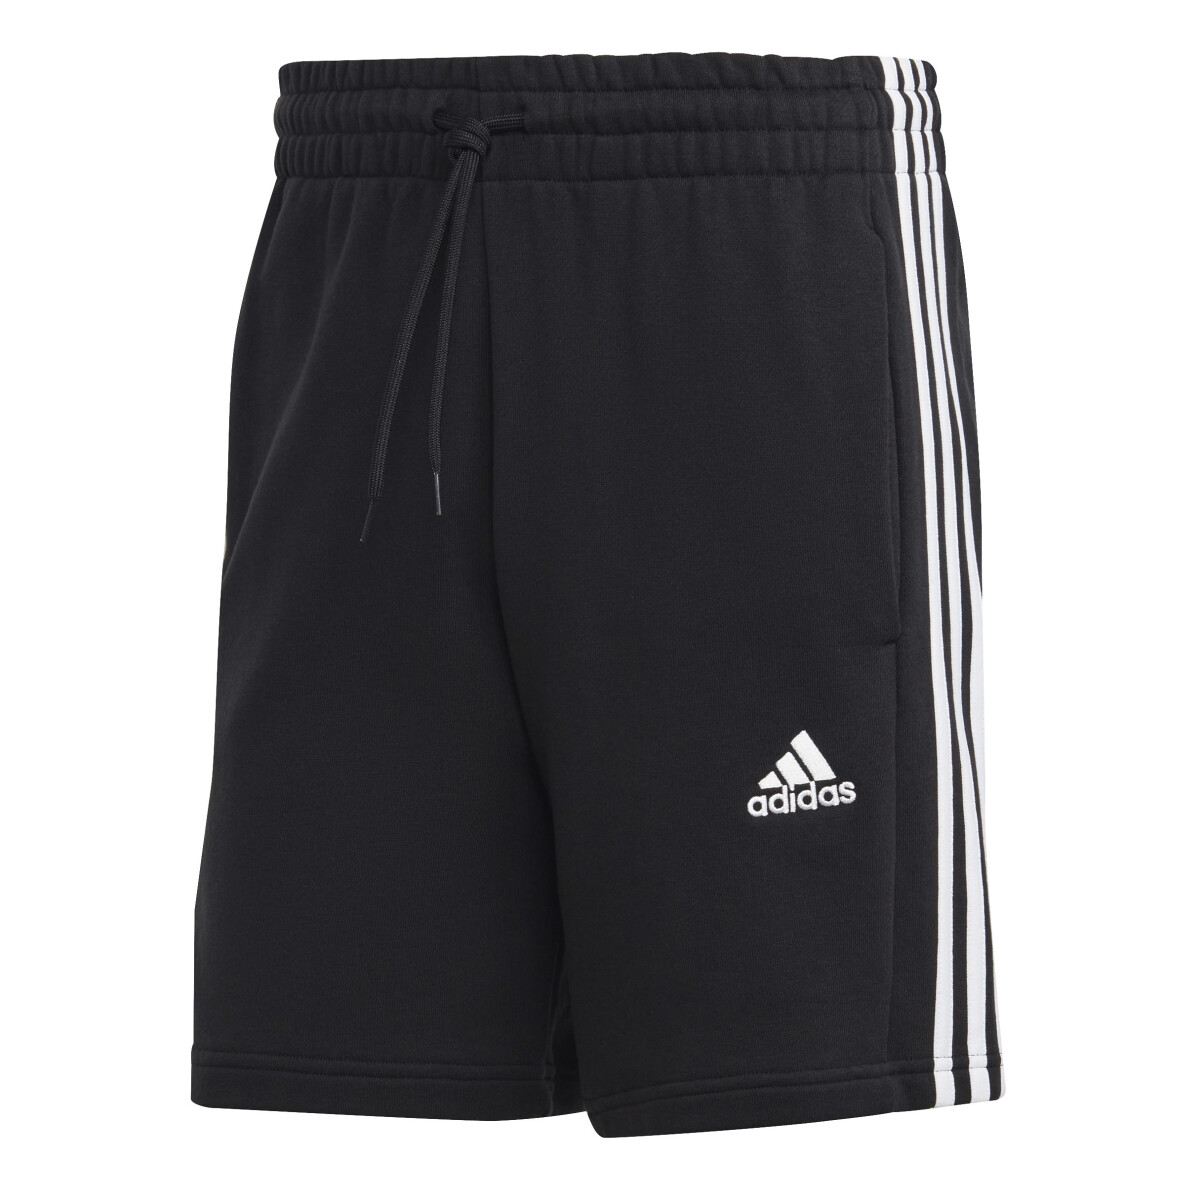 Short 3S FT Adidas - Negro/Blanco 